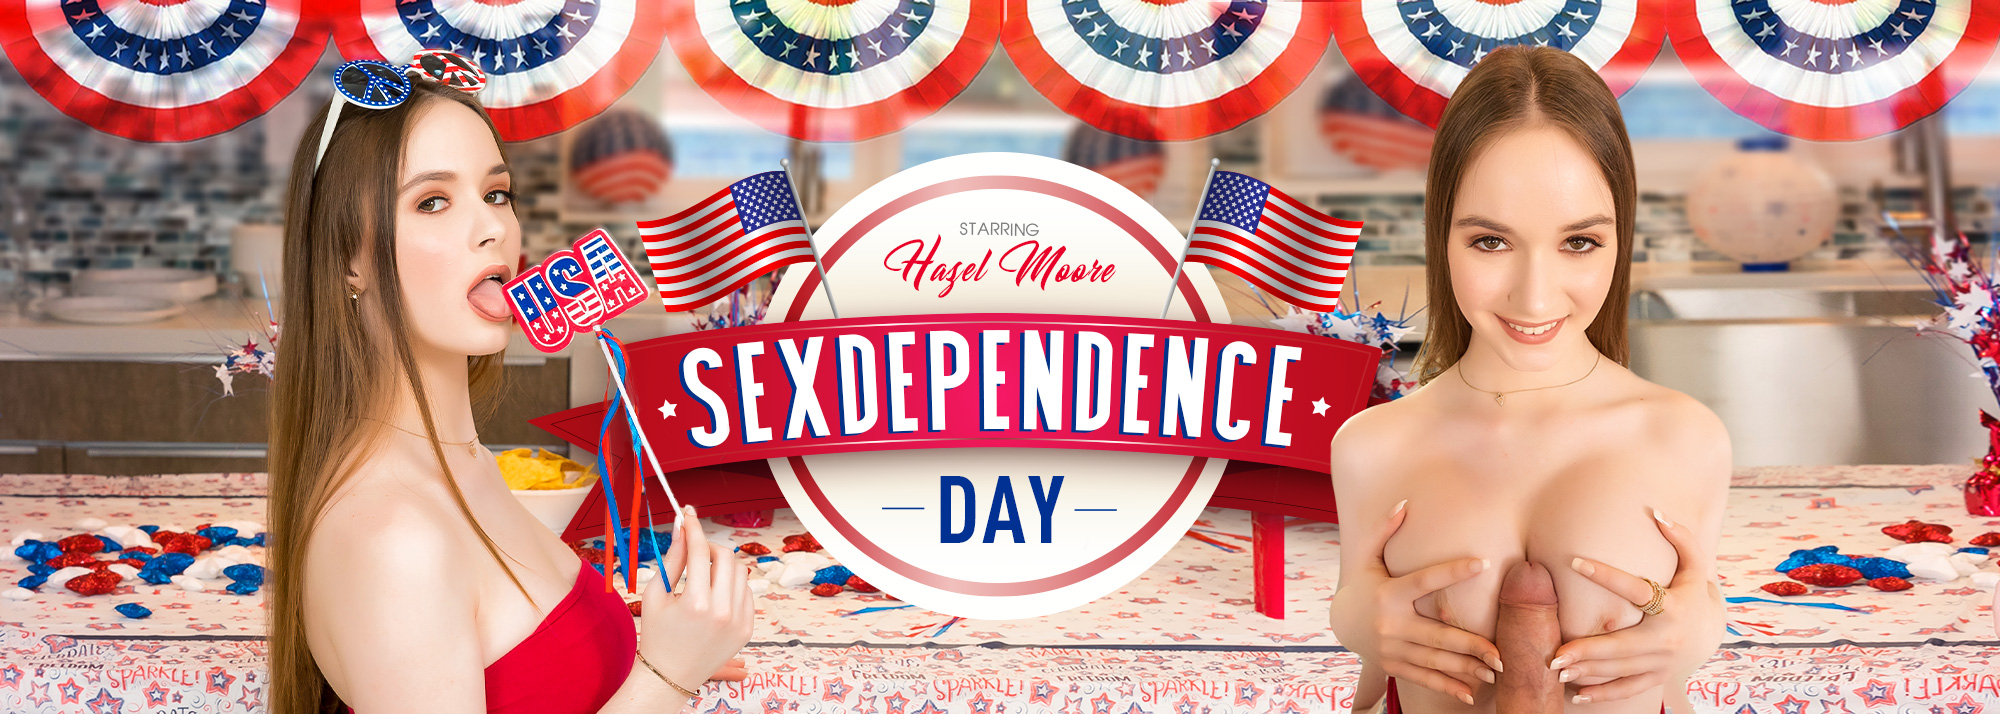 SEXdependence Day with Hazel Moore  Slideshow